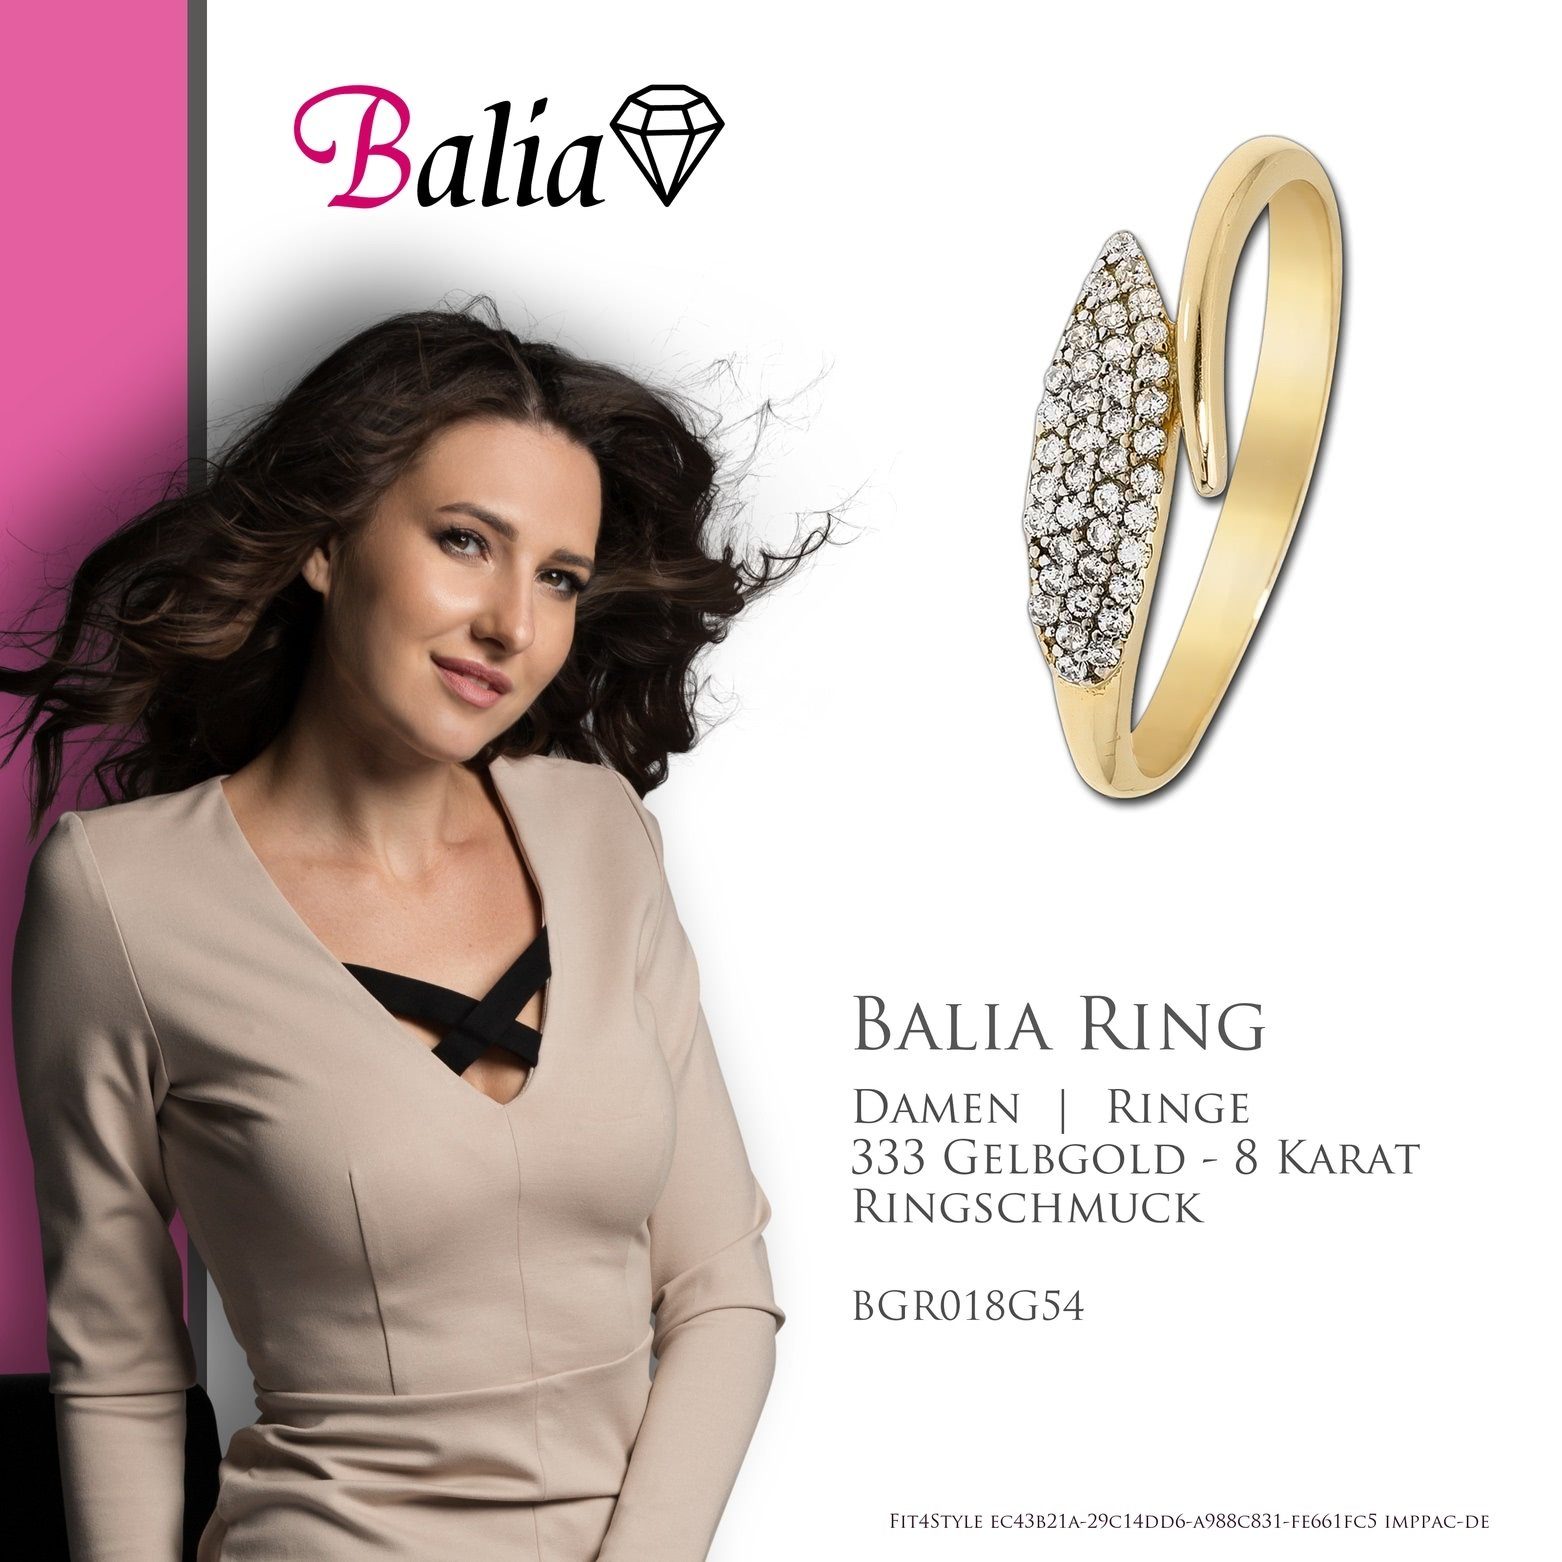 Balia - (Fingerring), 333 Blatt Gr.54 Gold Karat Balia (17,2) Ringe, 54 Goldring Ring Damen 8 Damen Blatt, 8Kt Gelbgold